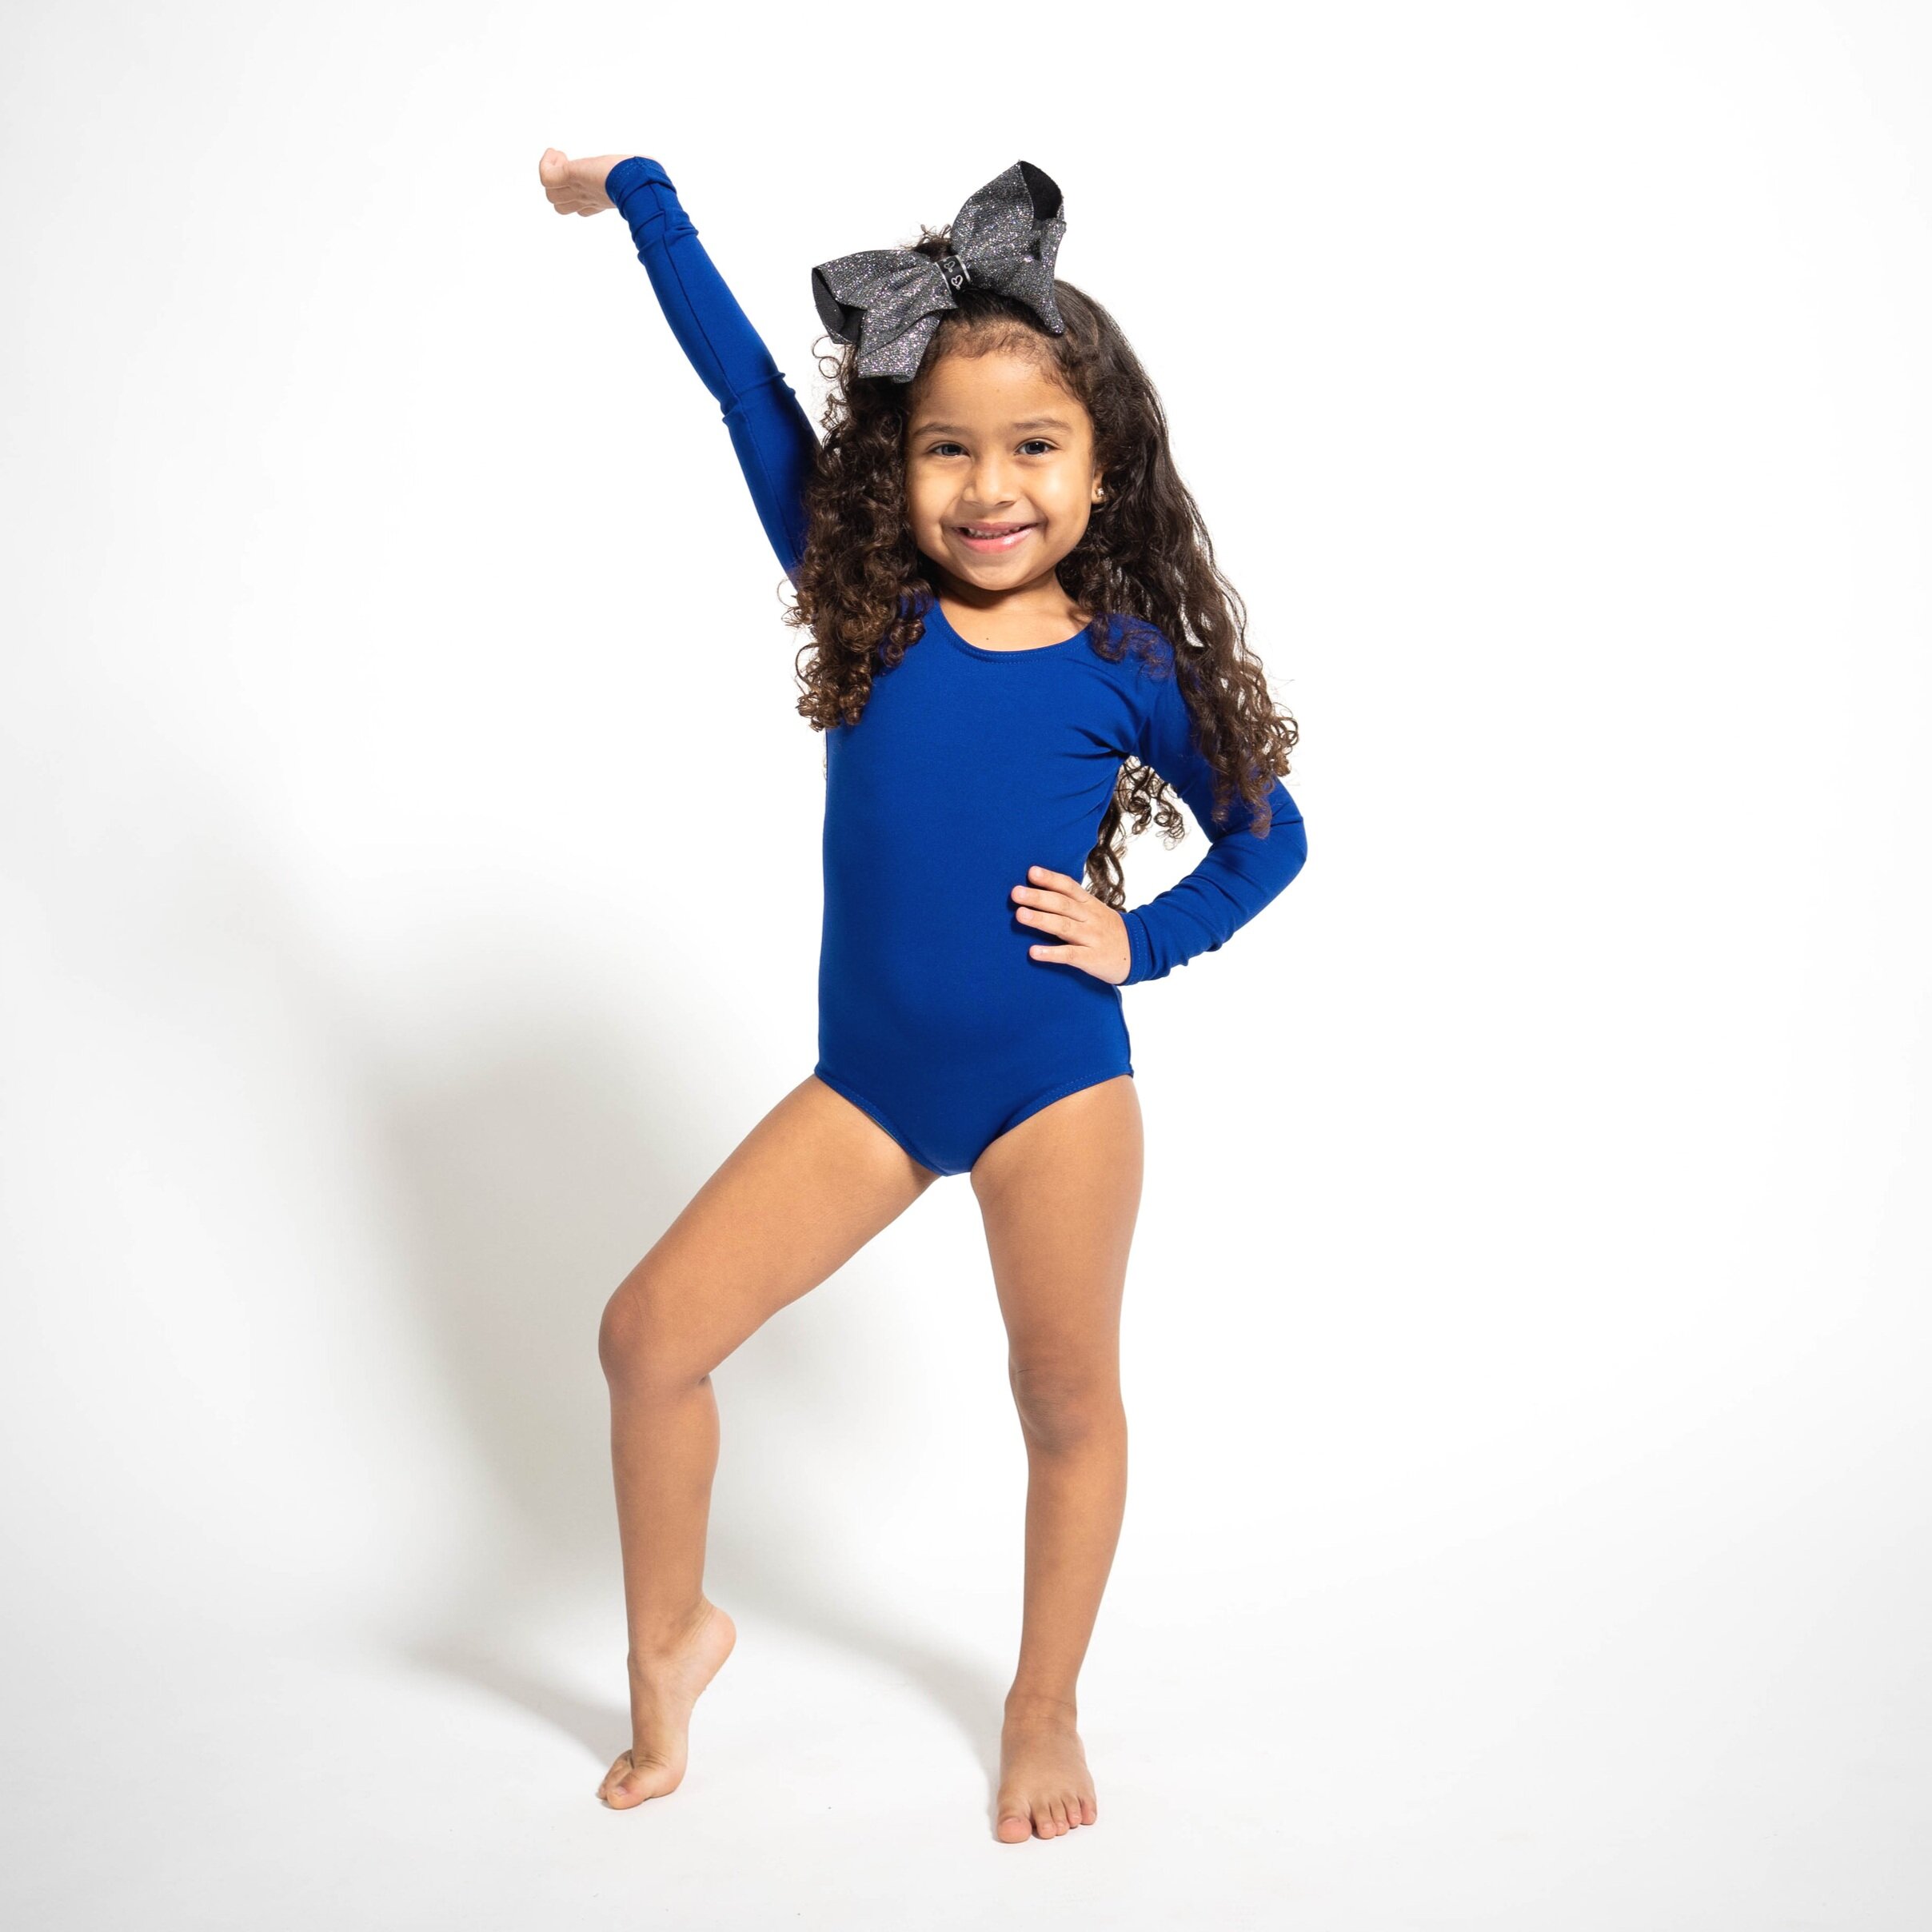 Photo of little girl wearing blue leotard posing. (Copy) (Copy) (Copy) (Copy) (Copy) (Copy) (Copy) (Copy) (Copy)